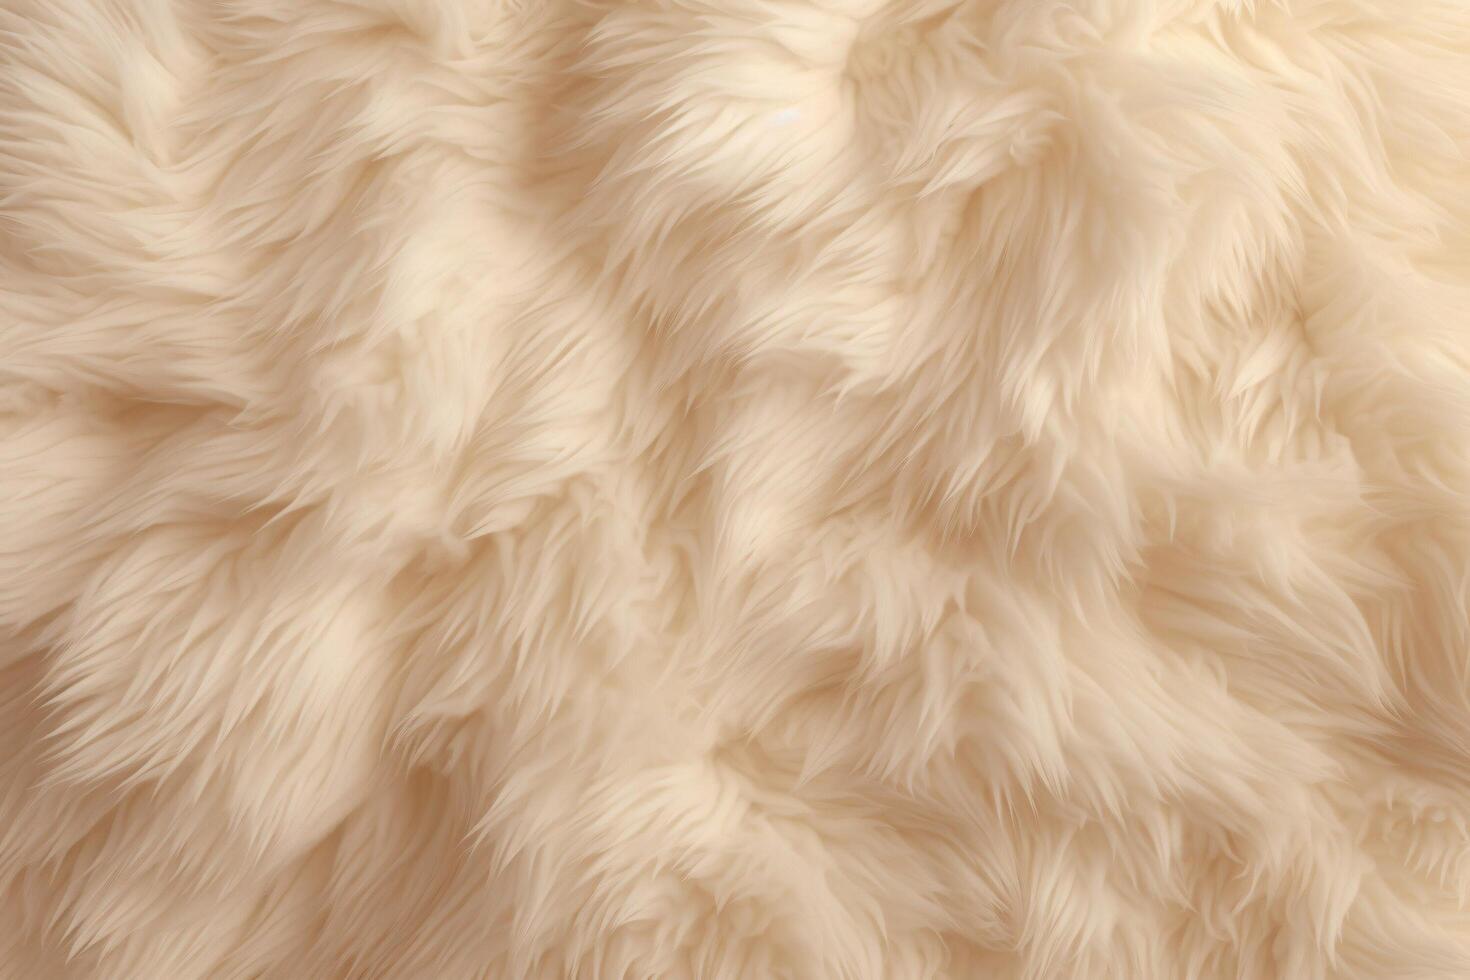 Bear Skin Fur Texture, Bear Fur Background, Fluffy Bear Skin Fur Texture, Animal Skin Fur Texture, Brown Fur Background, Brown Fur Texture, Fluffy Fur Texture, photo